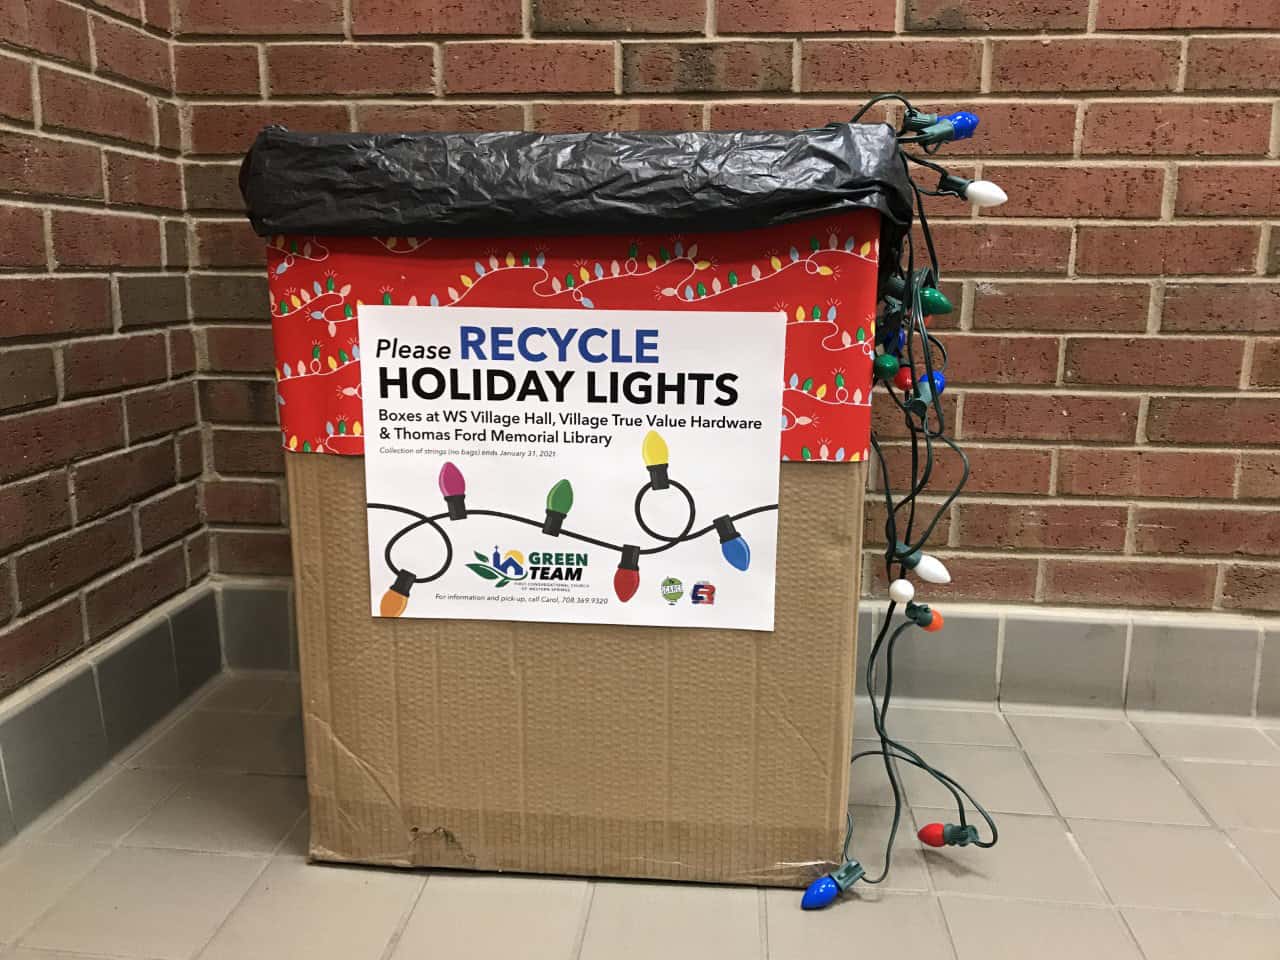 Holiday lights recycling box